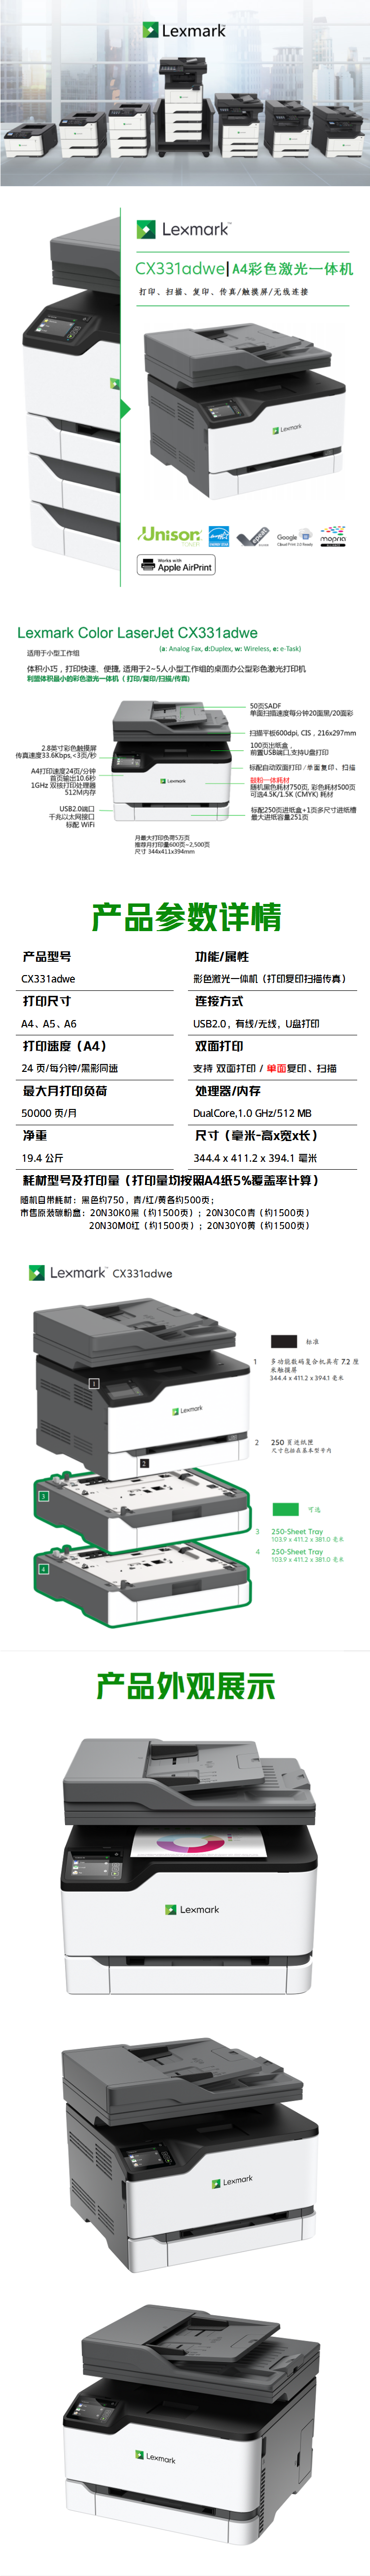 FireShot Capture 196 - 【利盟CX331adwe】利盟（Lexmark）CX331adwe A4彩色激光打印一体机 自动双面 无线WiFi（打印_复印_扫描_传真_ - item.jd.com.png